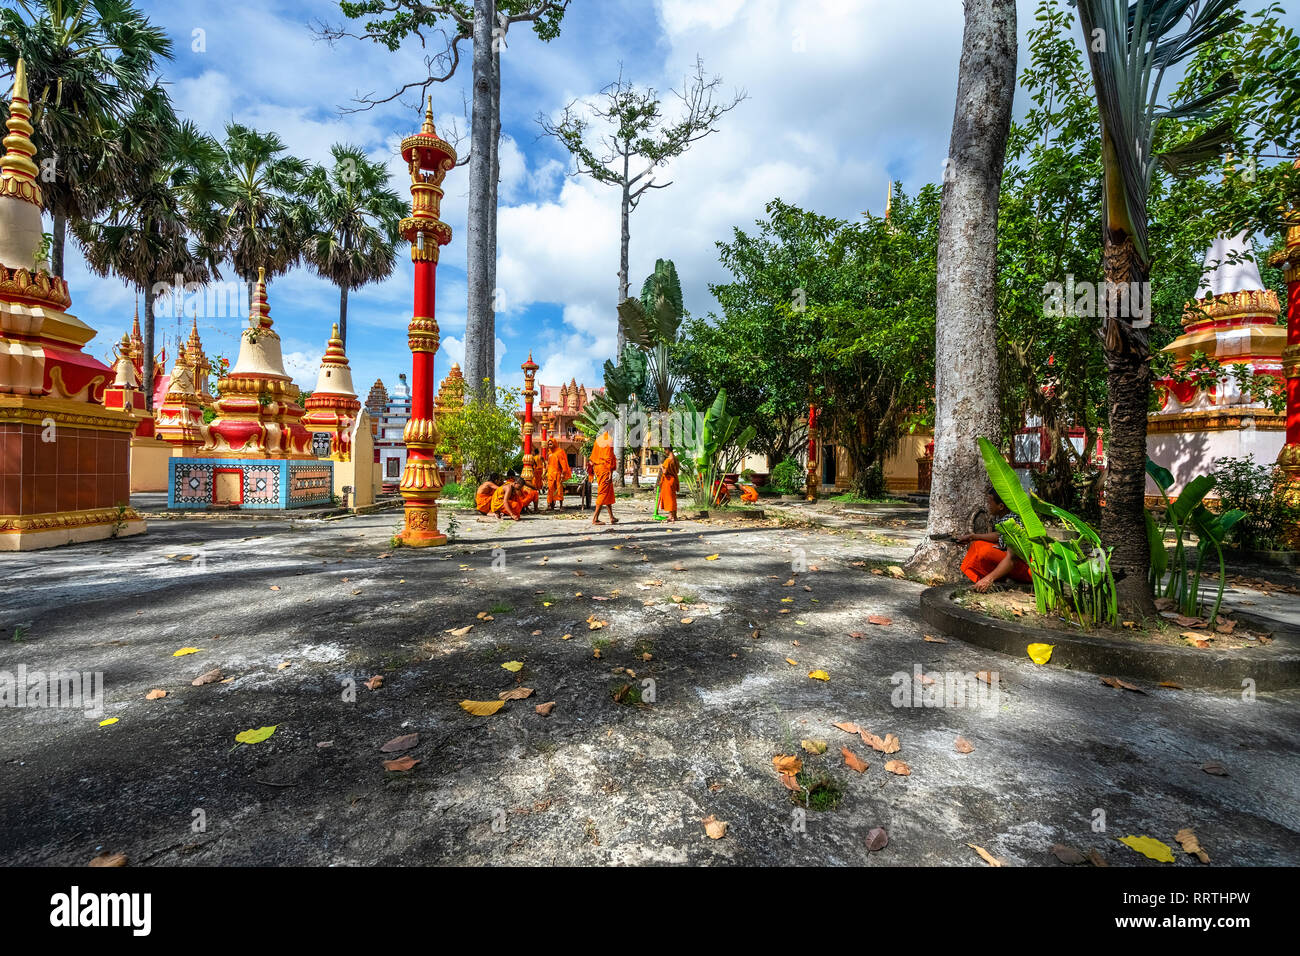 Khmer architecture at the Xiem can pagoda, Bac lieu, Vietnam Stock Photo